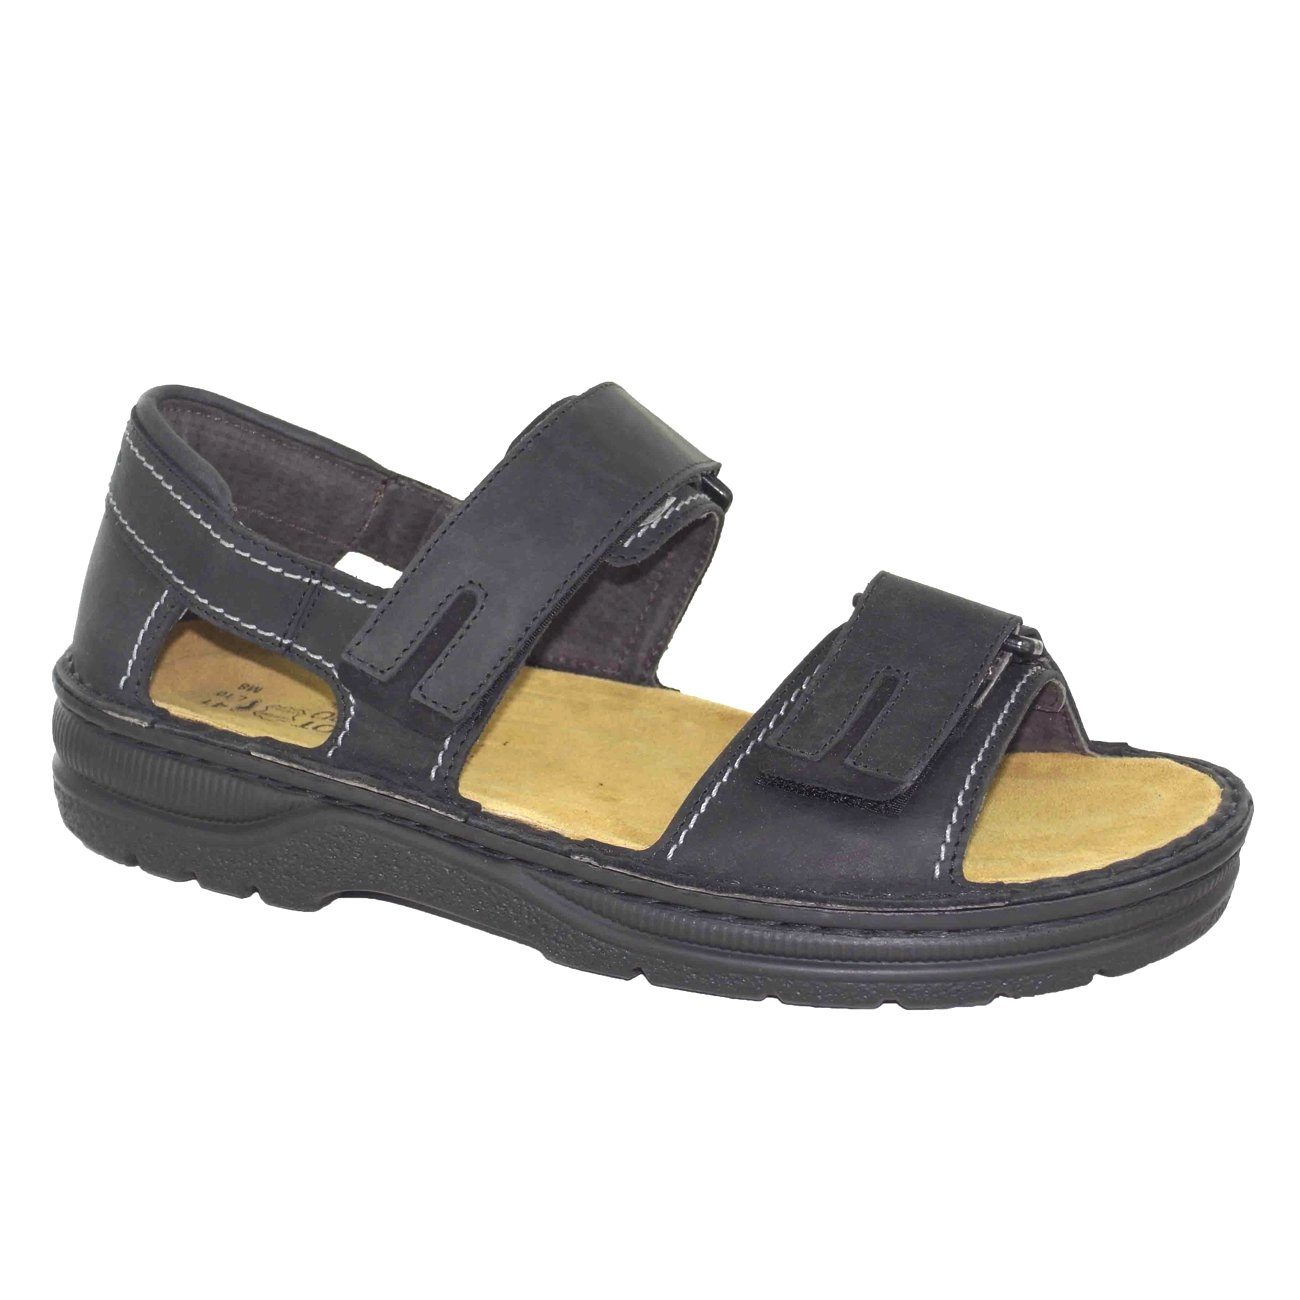 NAOT, Martin, Sandal, Leather, Medium Fit, Oily Coal Combo Sandals Naot Oily Coal Combo 40 